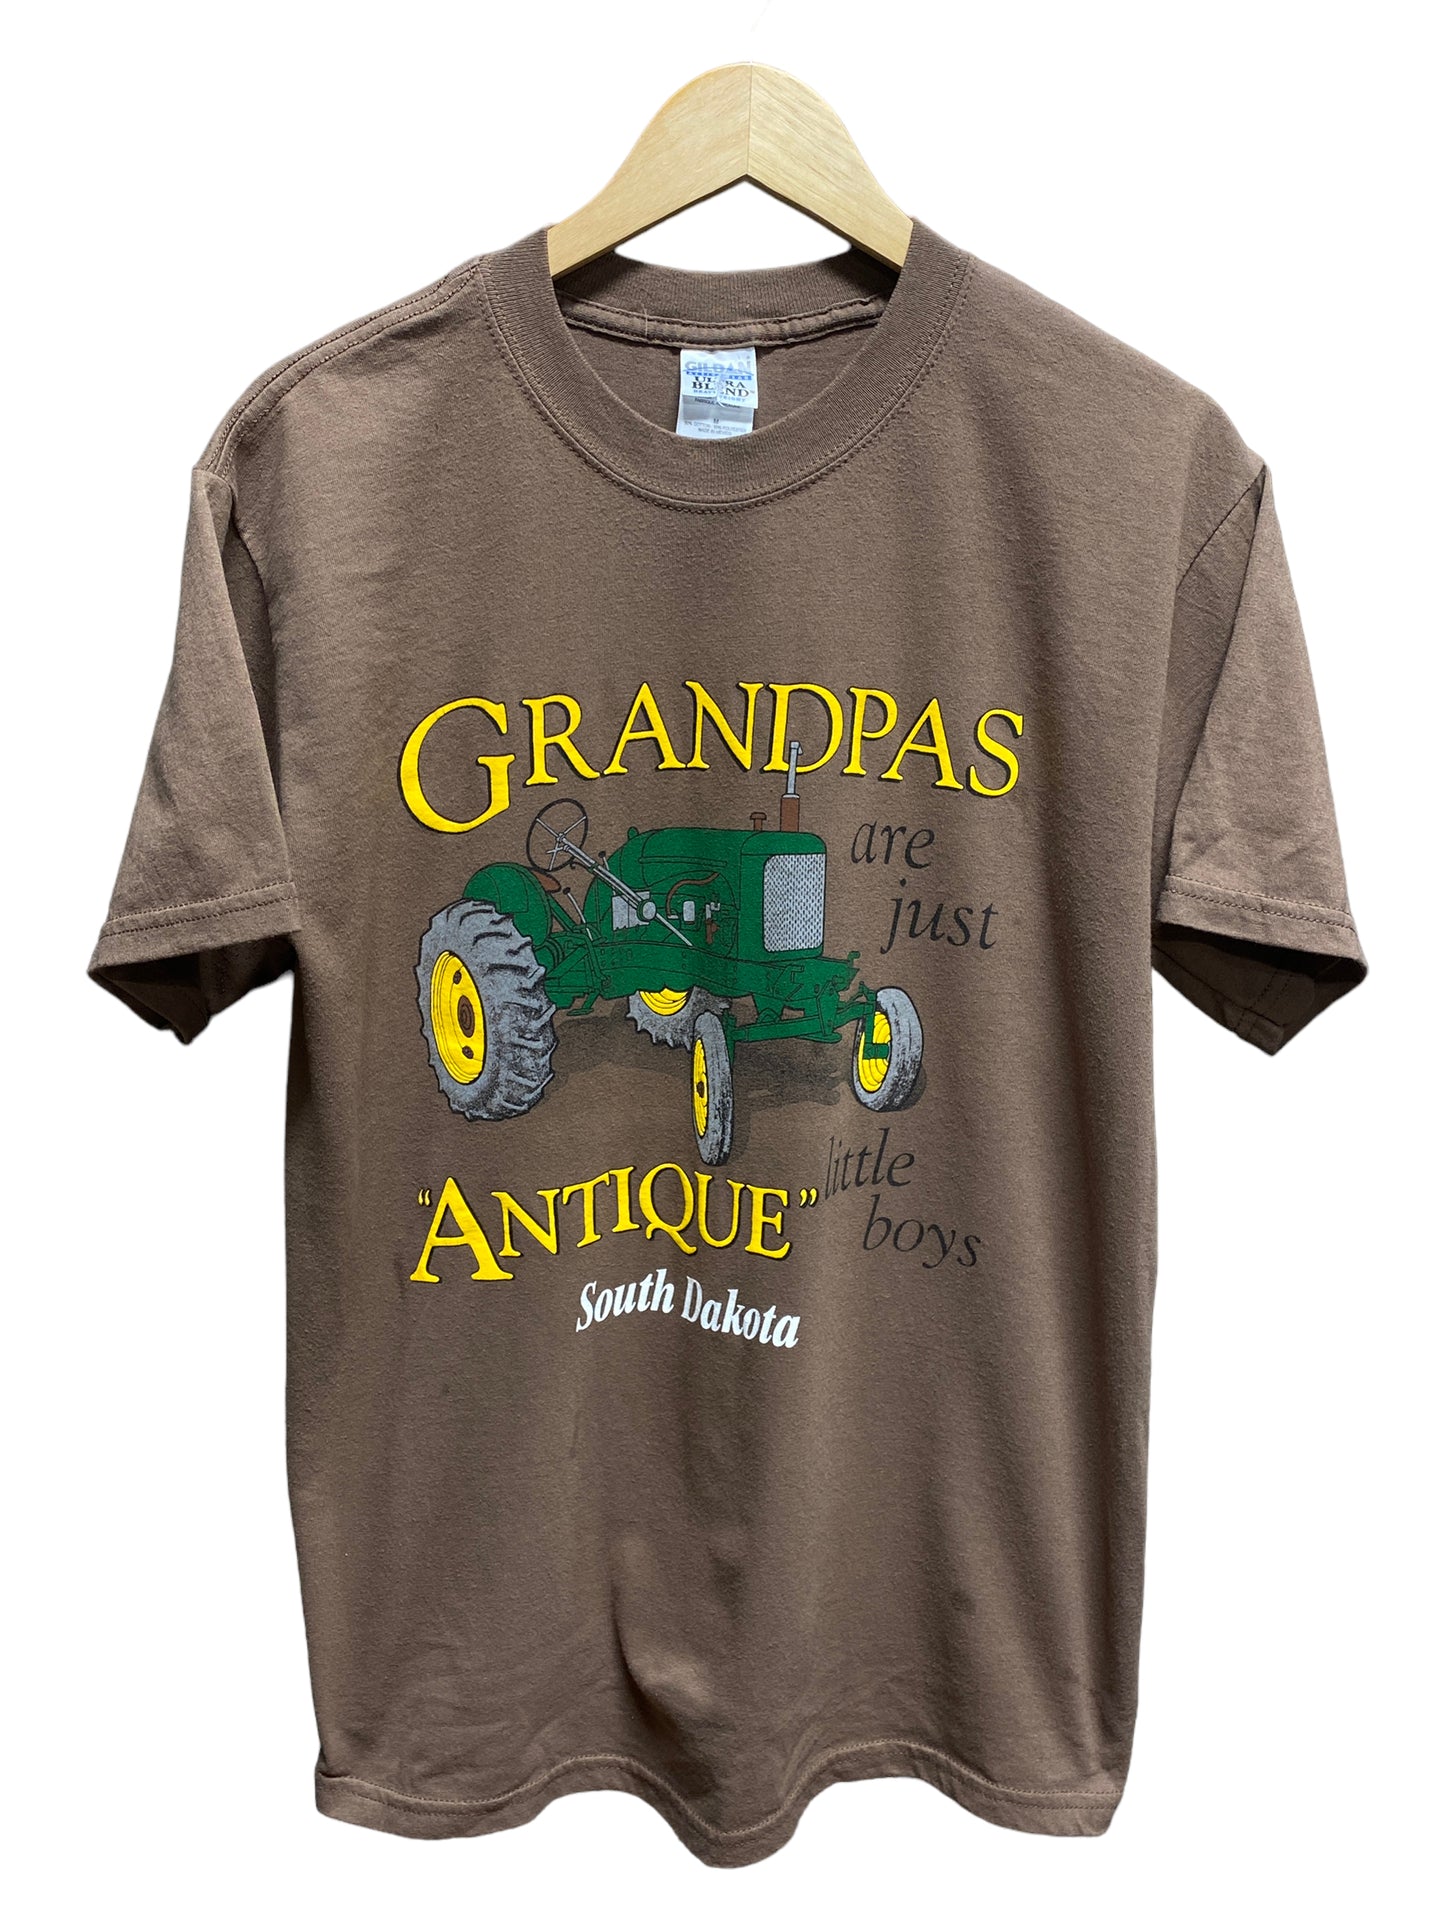 Vintage South Dakota Grandpas Graphic Tee Size Medium